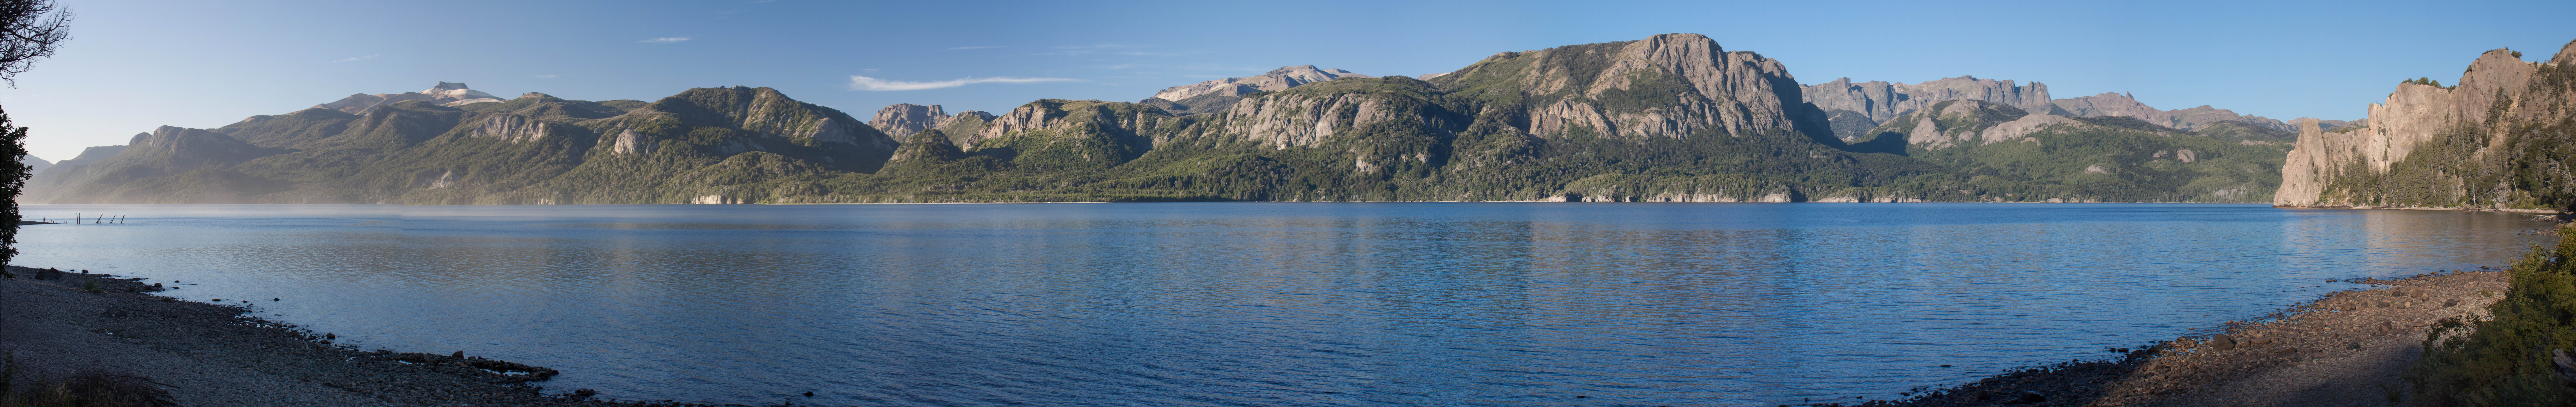 Lago Traful.